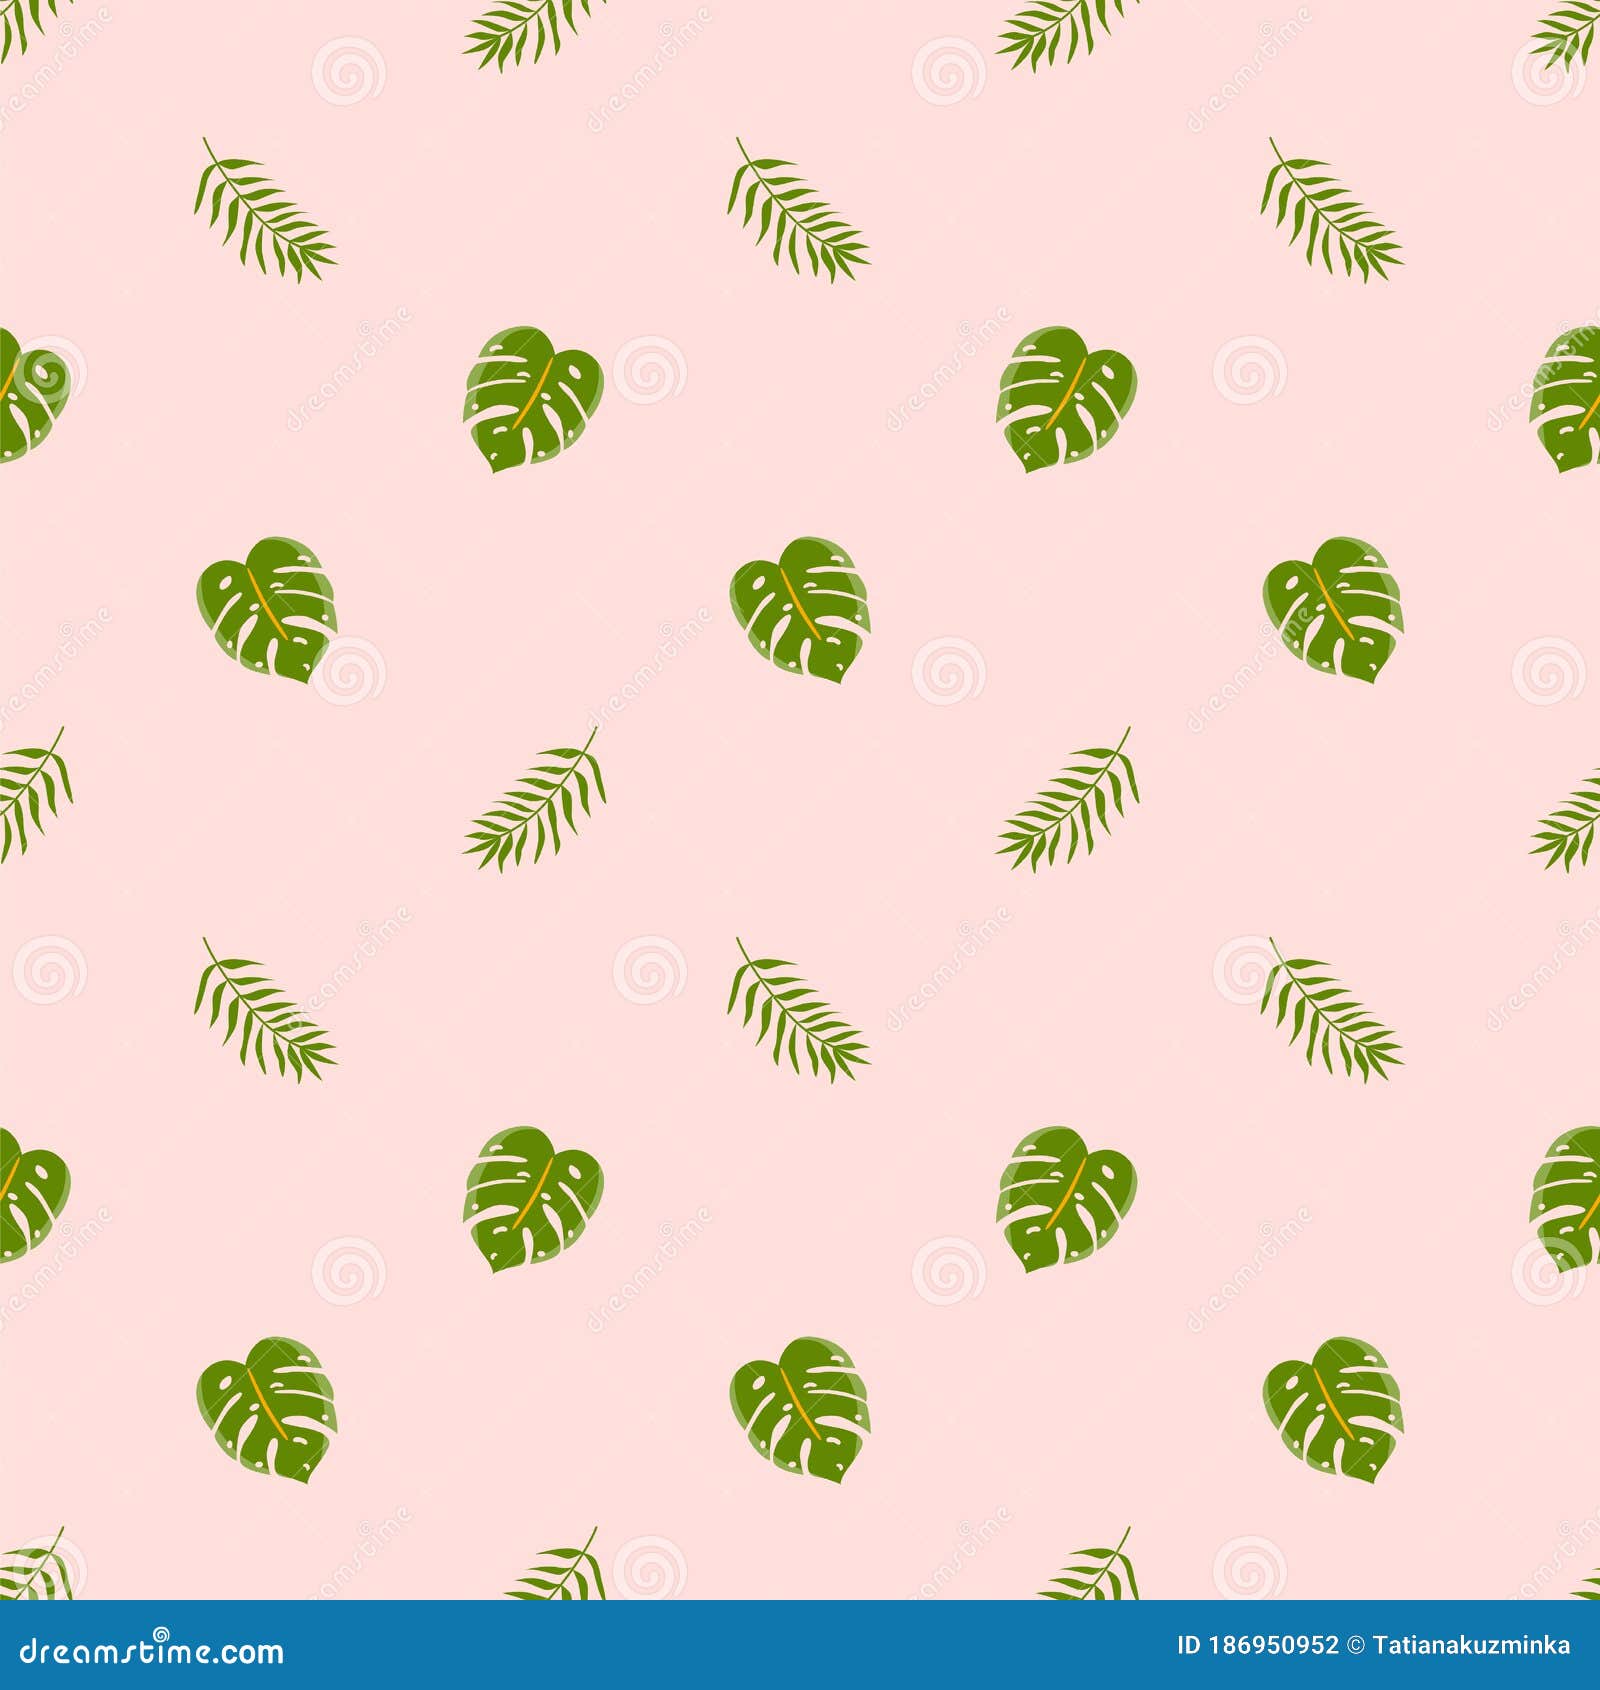 Simple Cute Summer Wallpapers  Wallpaper Cave